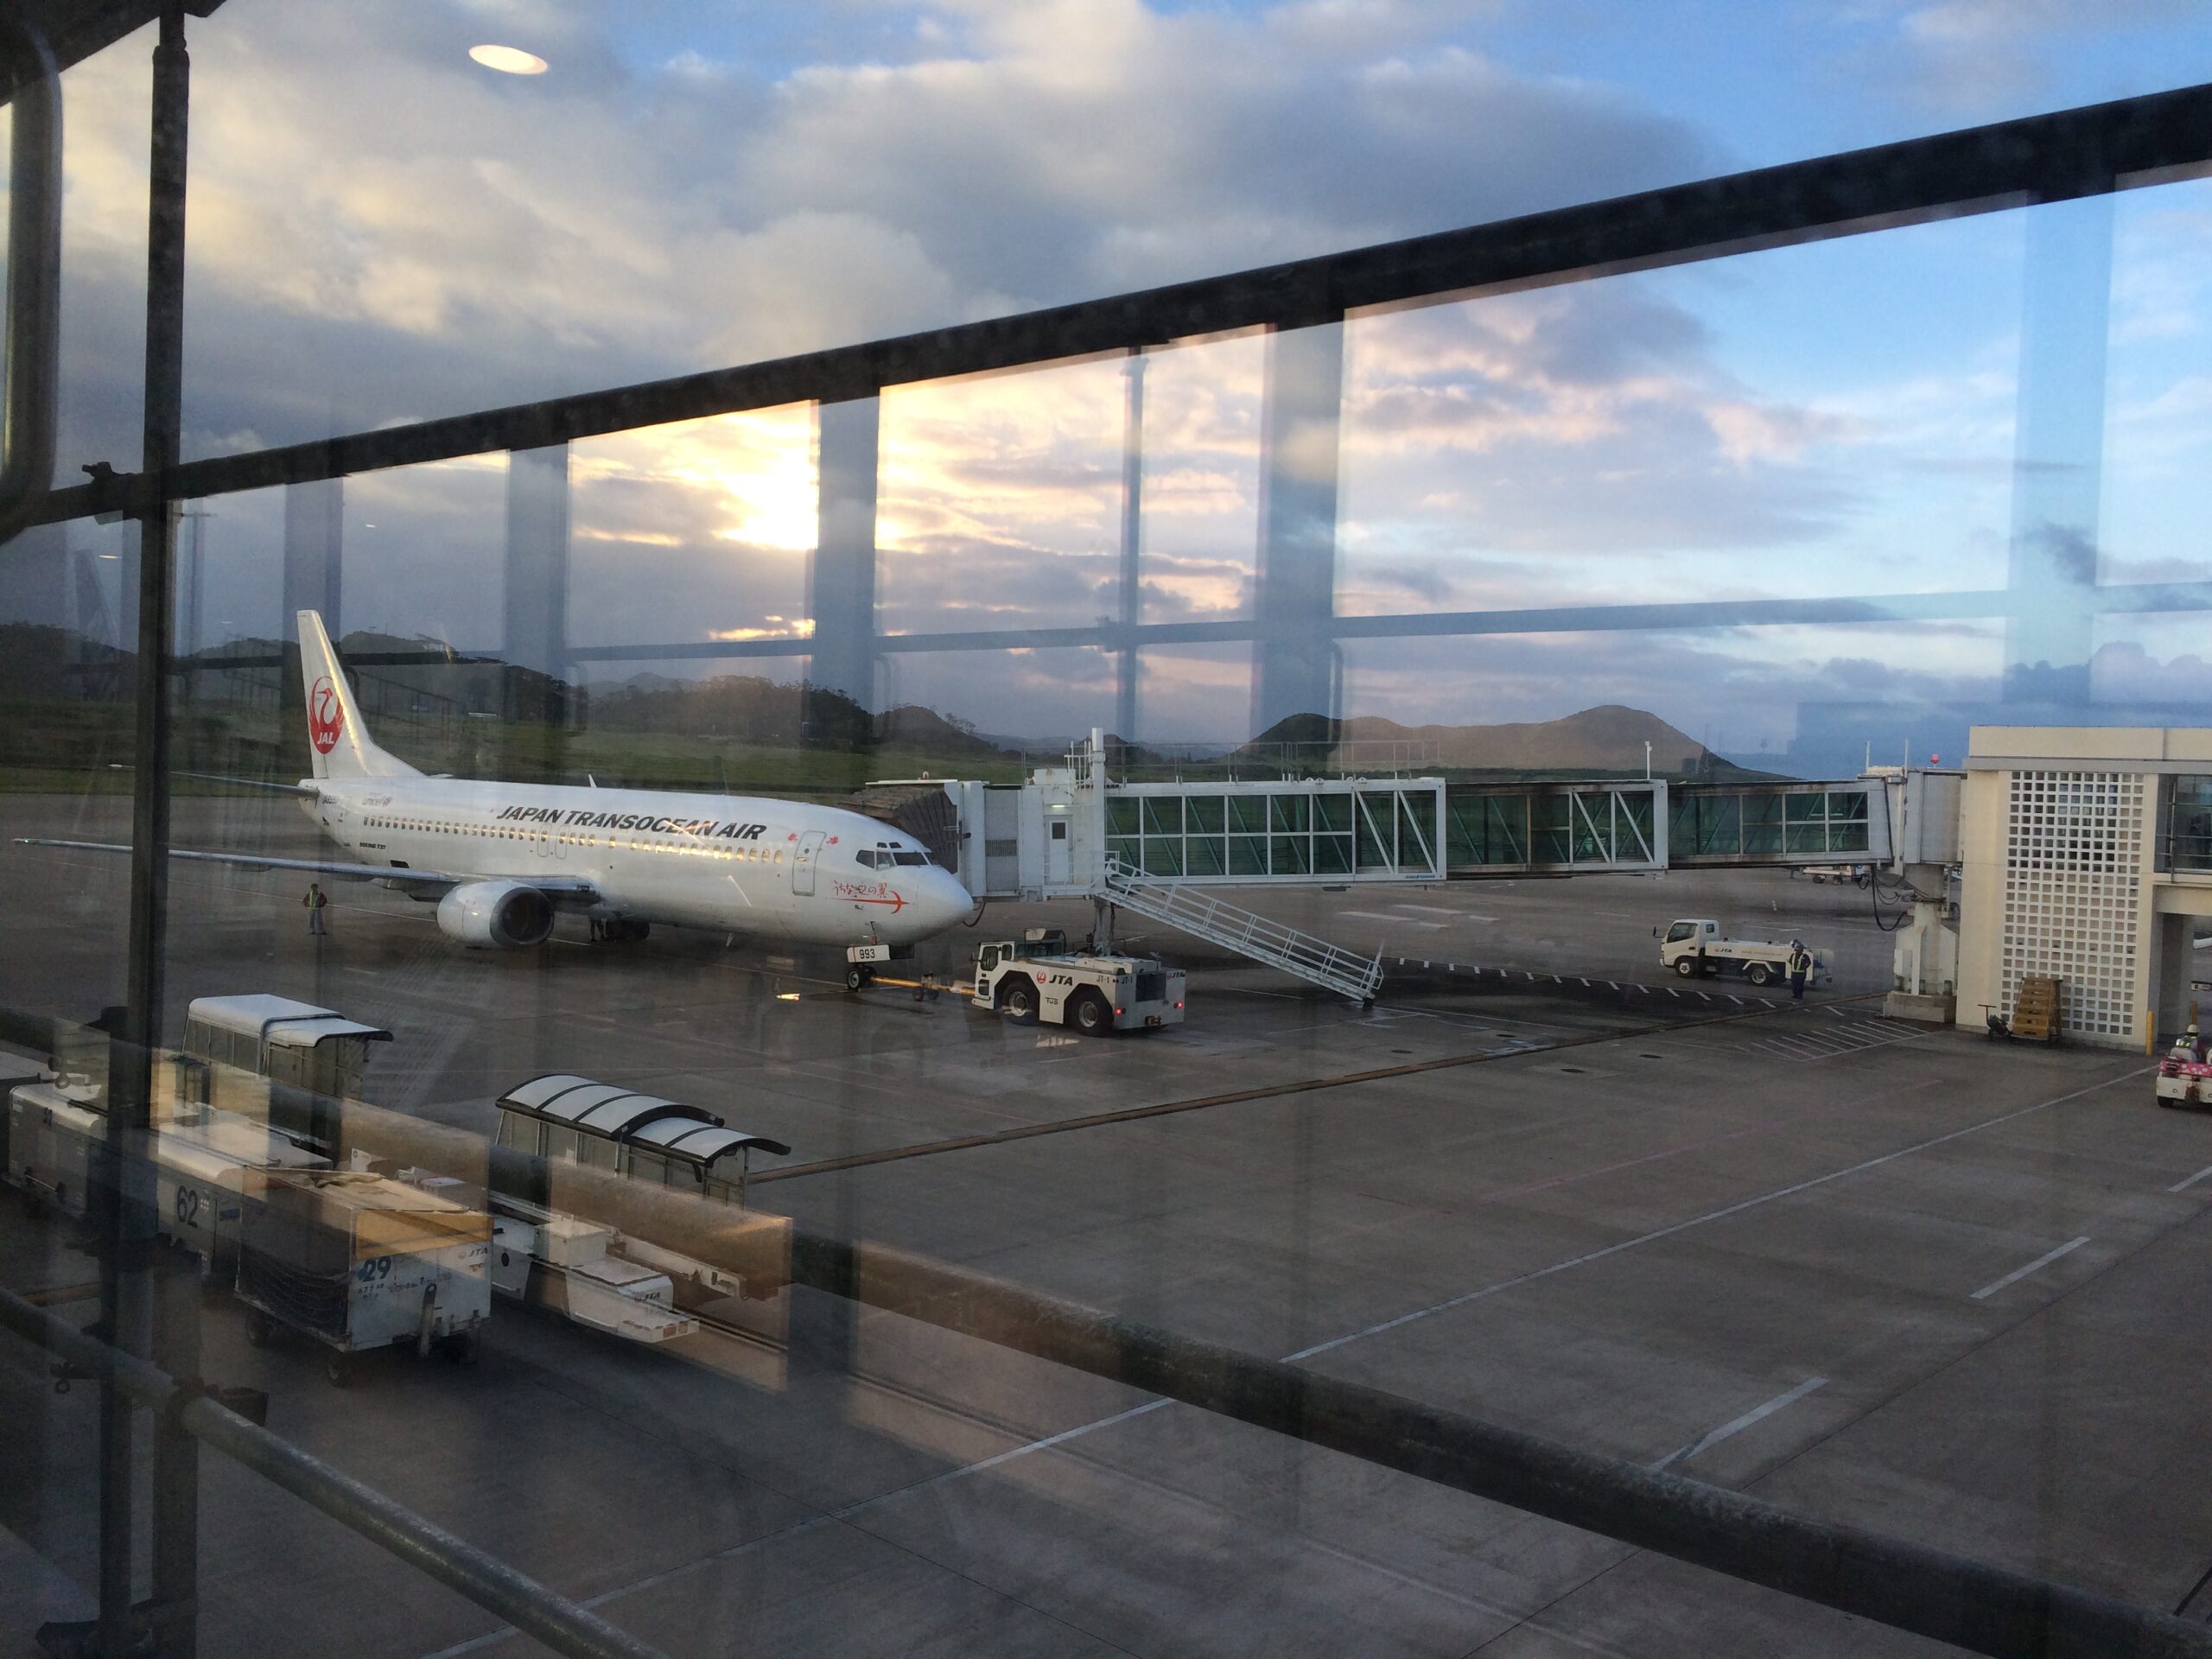 ishigaki-airport